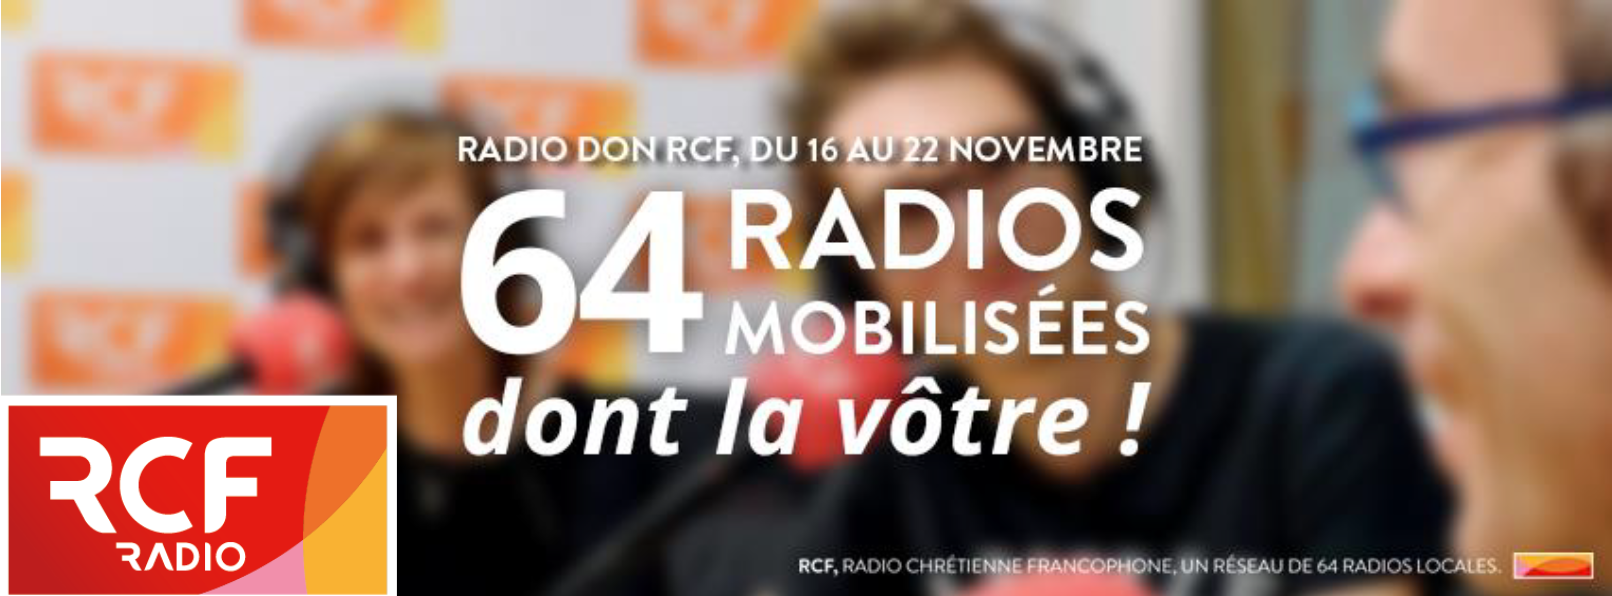 RCF Hauts-de-France organise son Radio Don